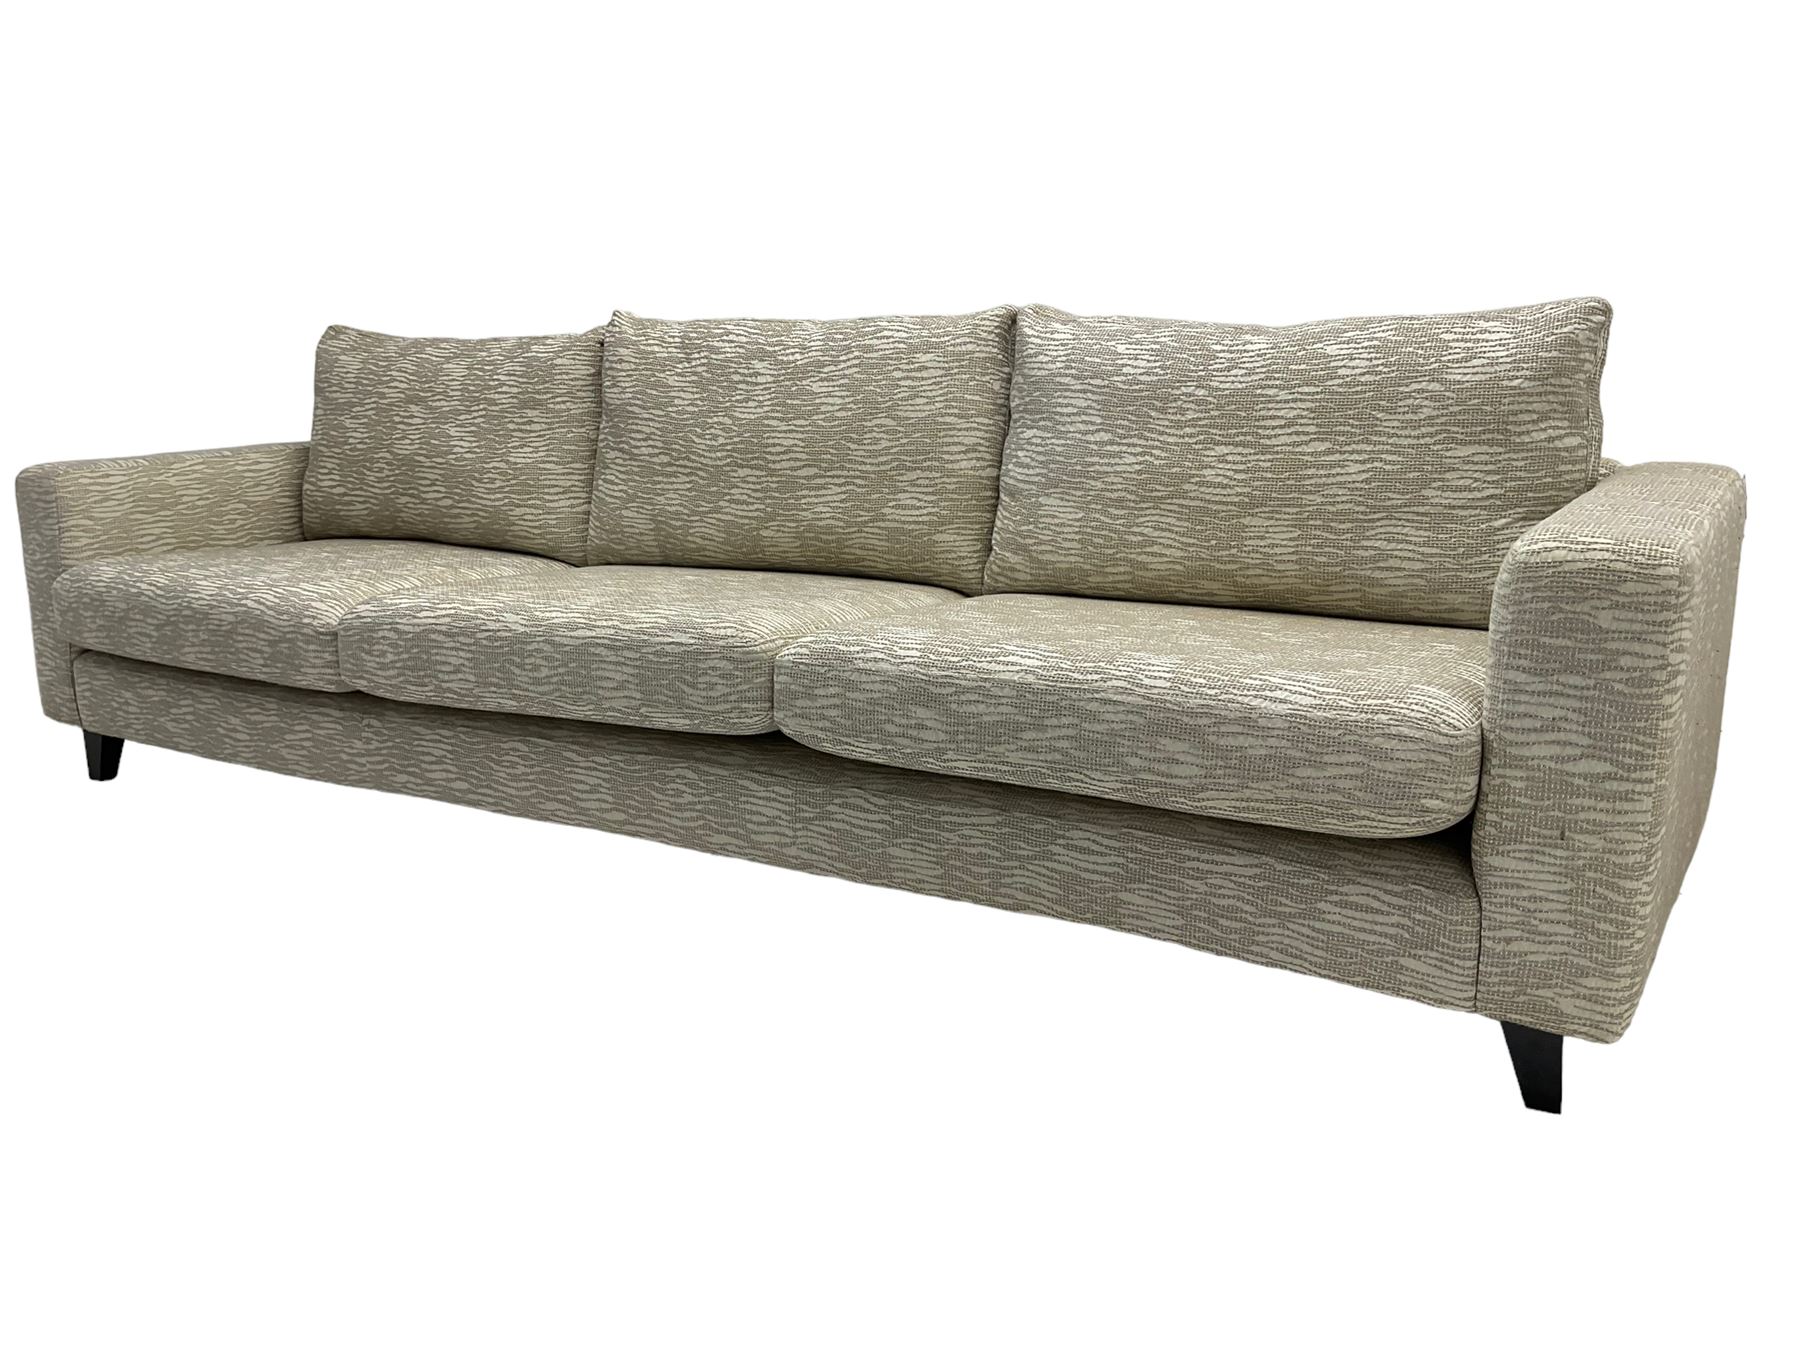 Orior - contemporary large three seat sofa